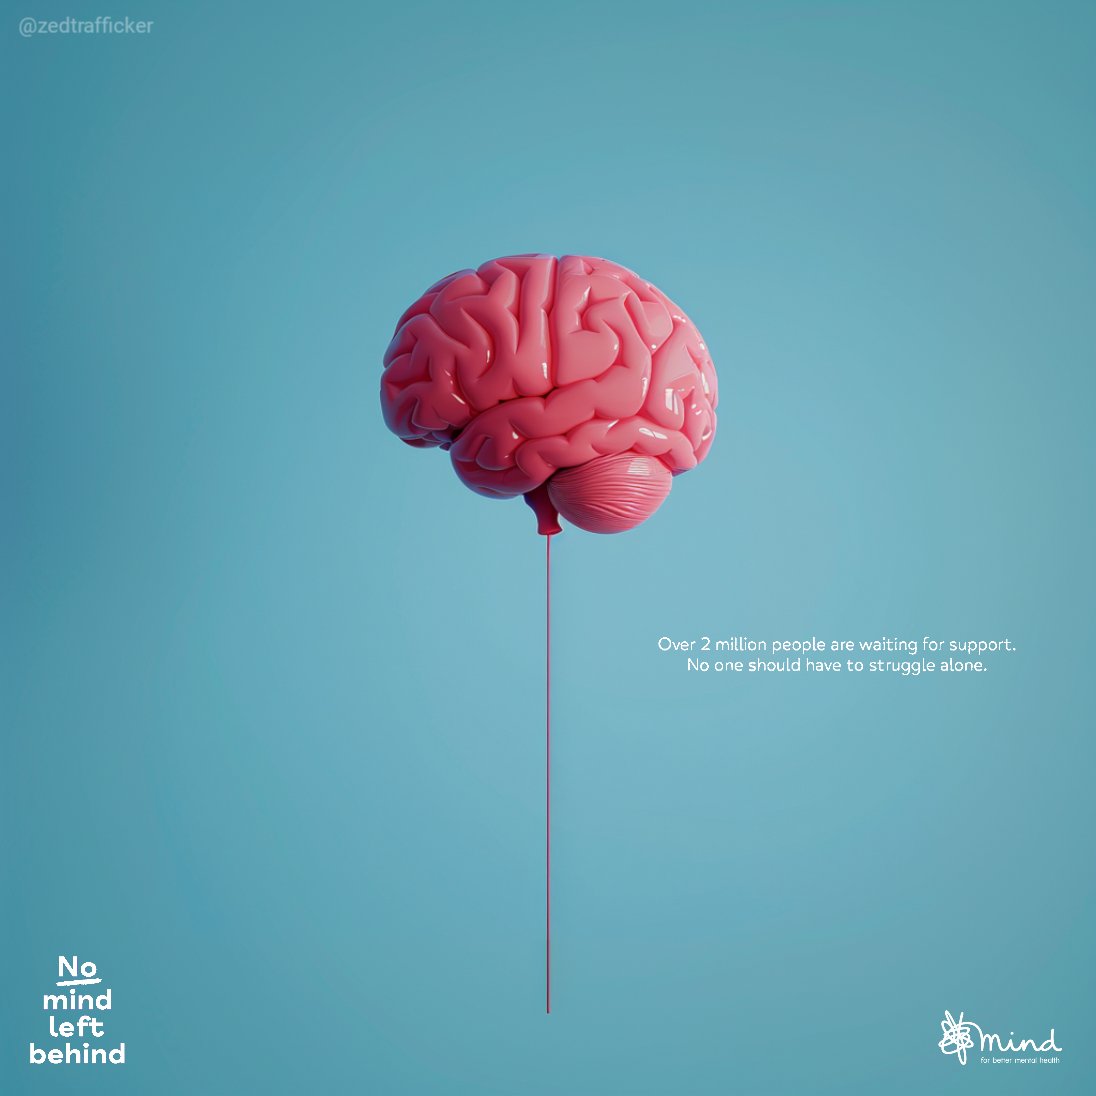 Lost balloon #NoMindLeftBehind campaign by @MindCharity for #MentalHealthAwarenessWeek @OneMinuteBriefs #Advertising